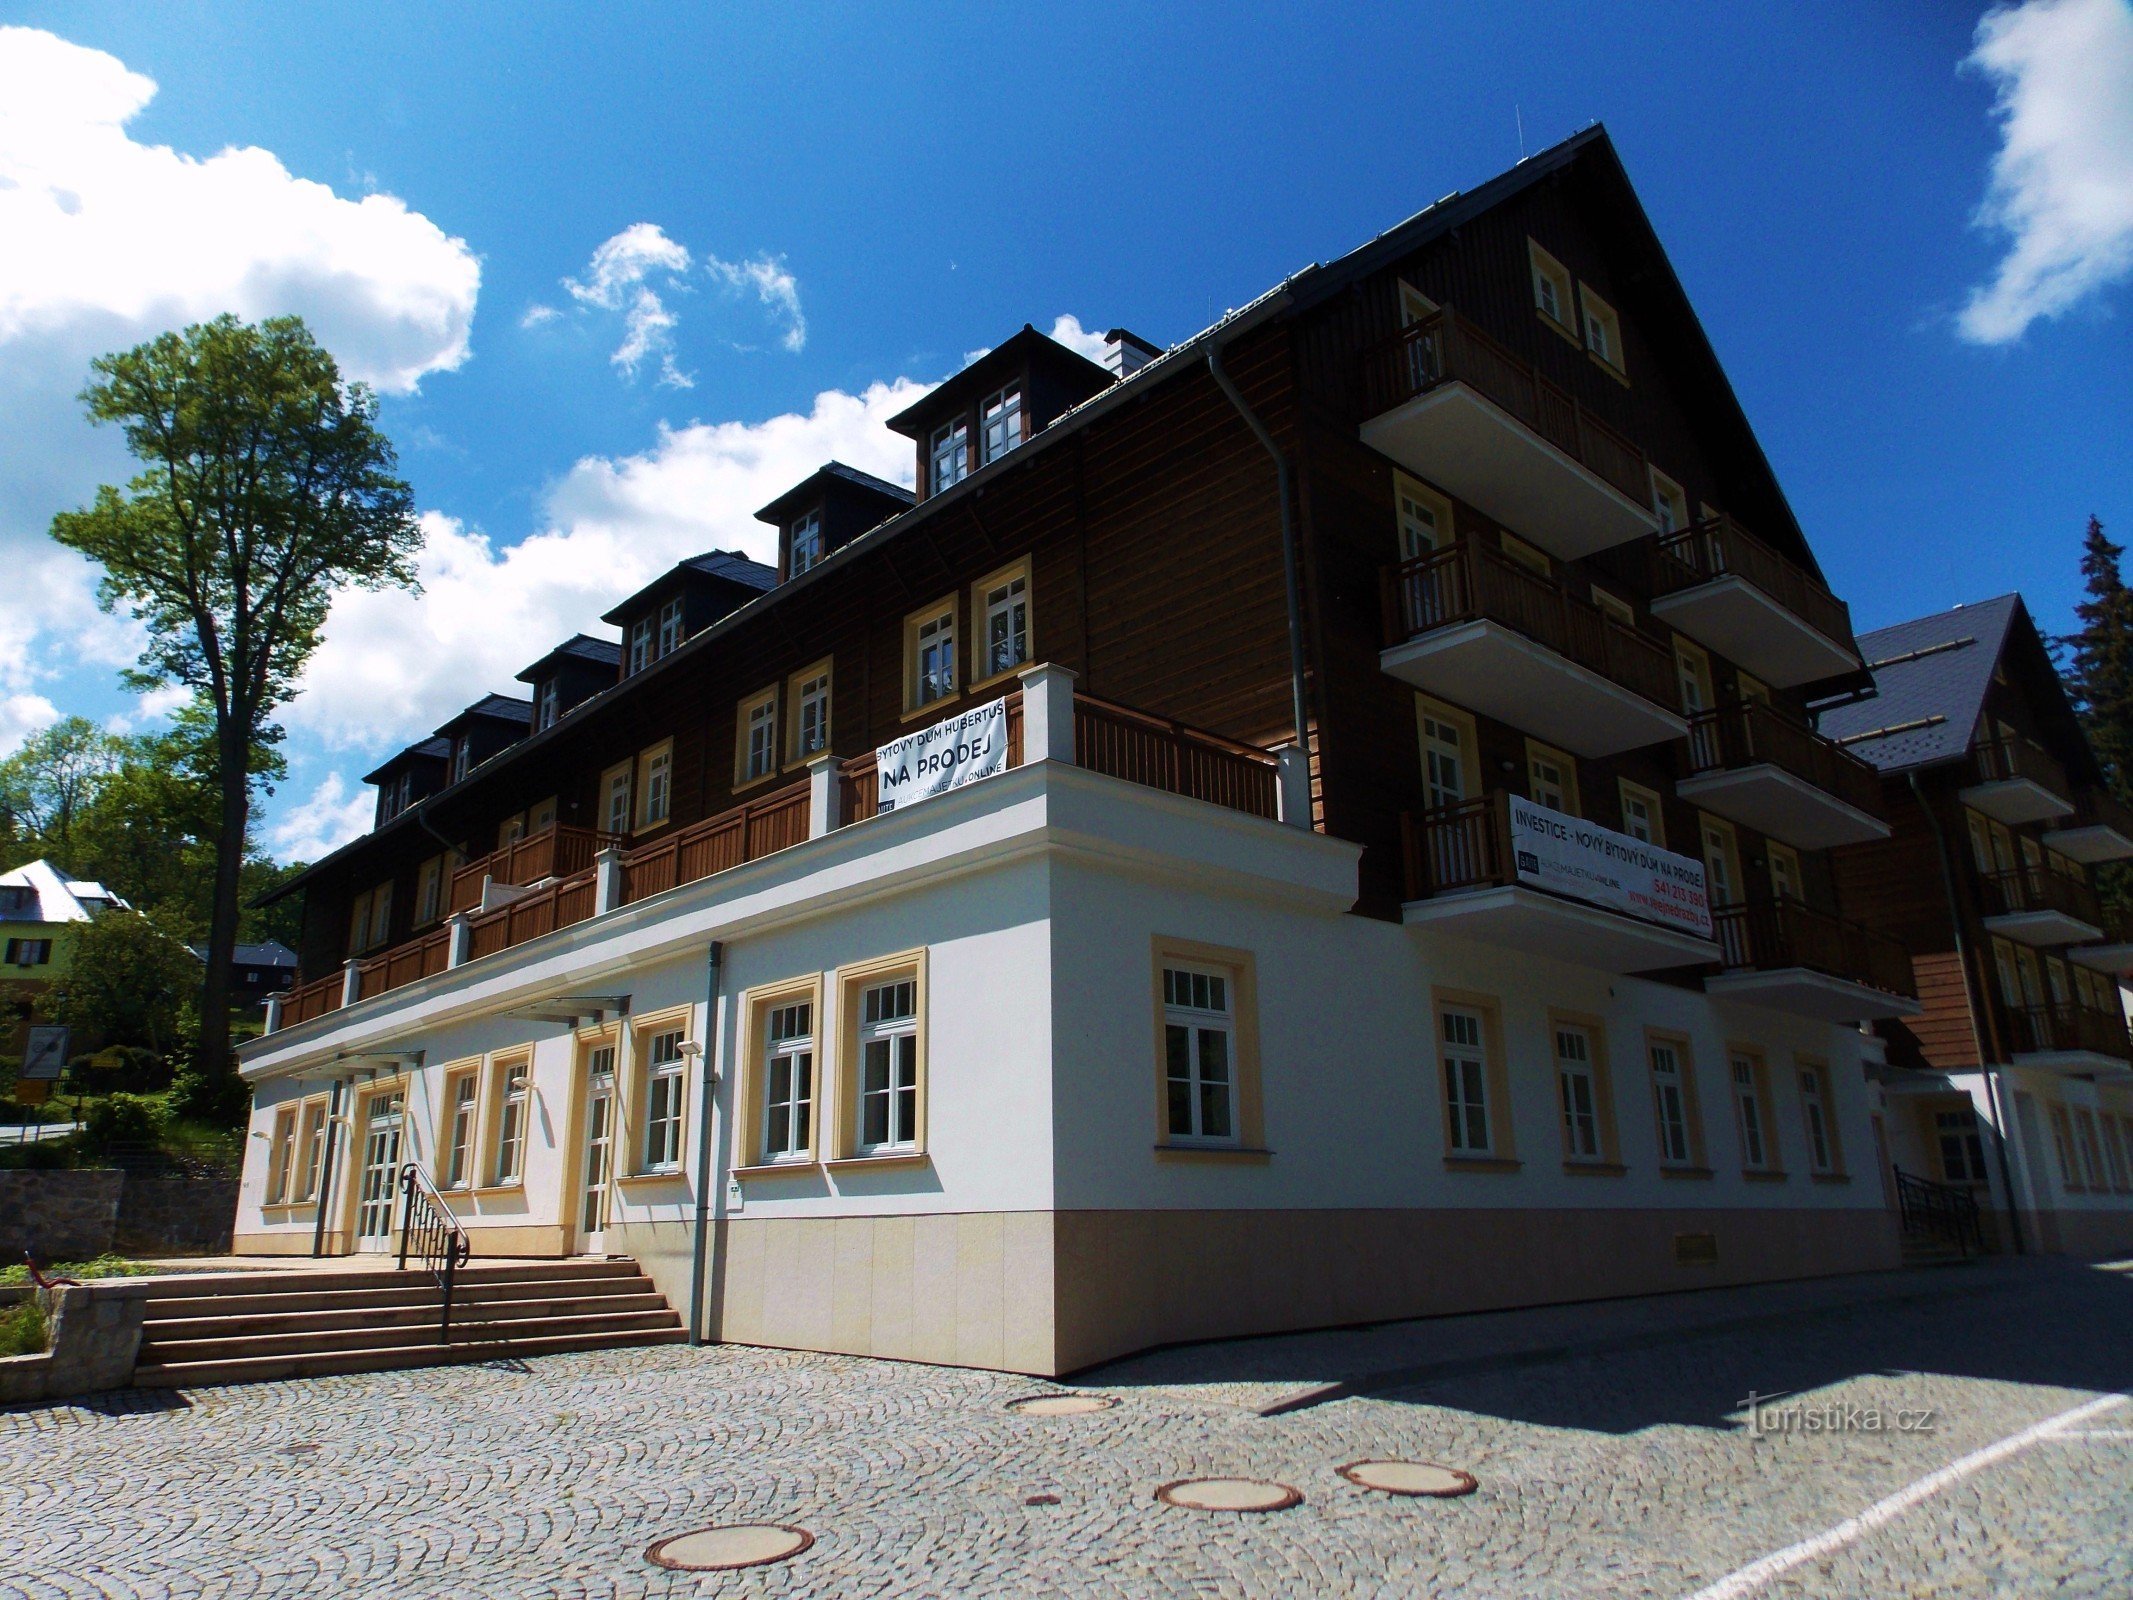 El legendario Hotel Hubertus en Karlová Studánka